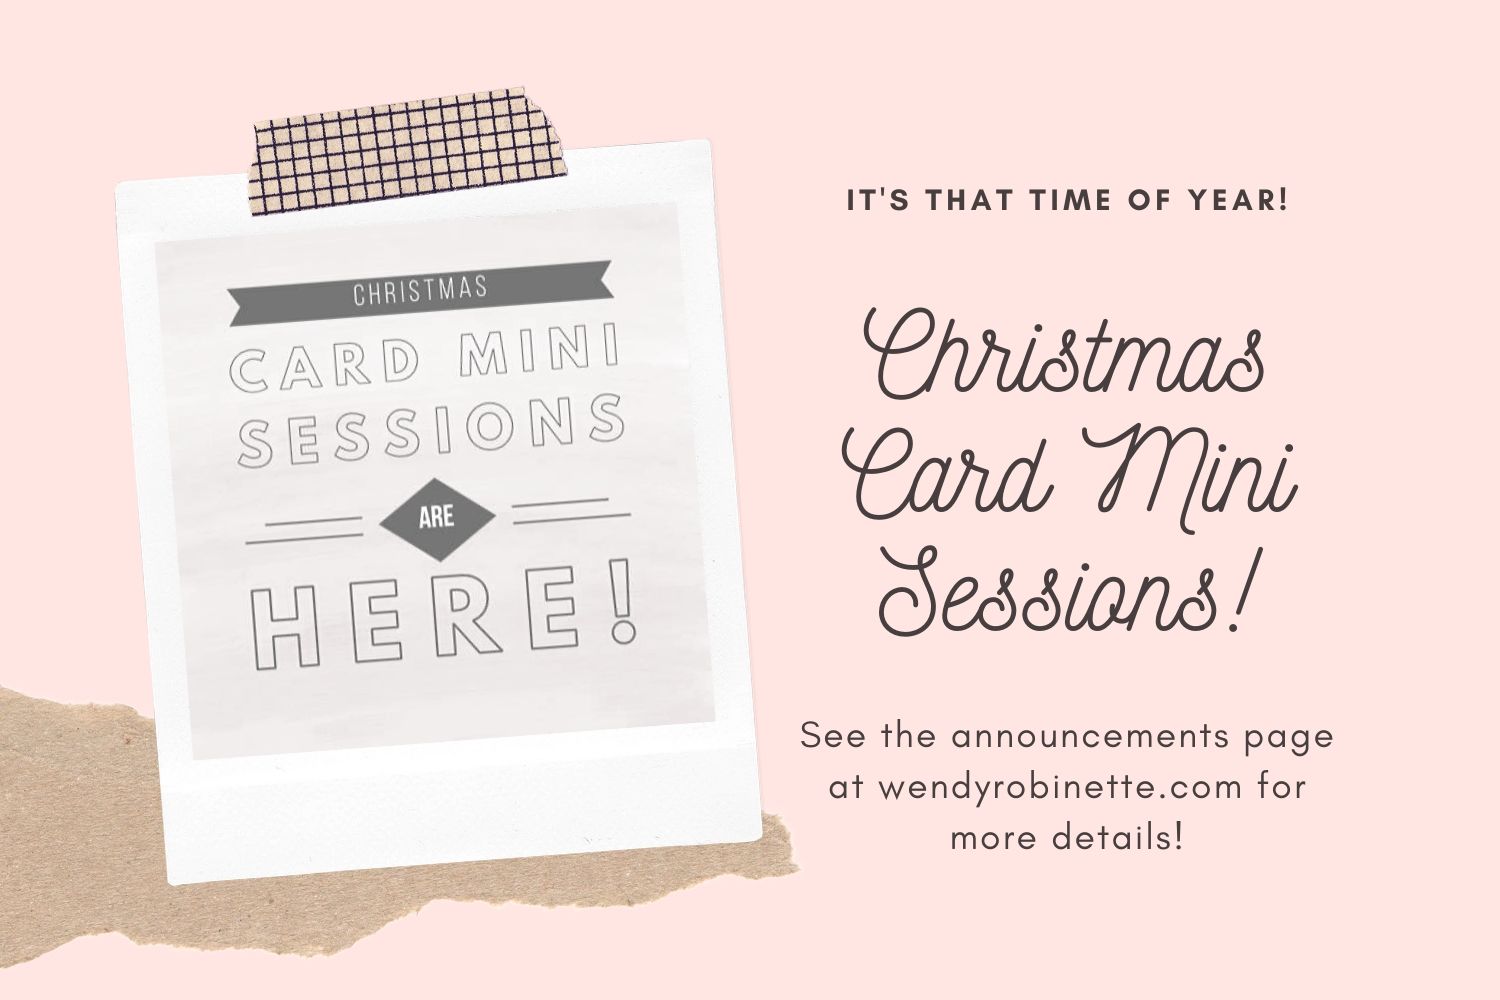 Christmas Card Mini Sessions in Natchitoches, La and Coushatta, La.